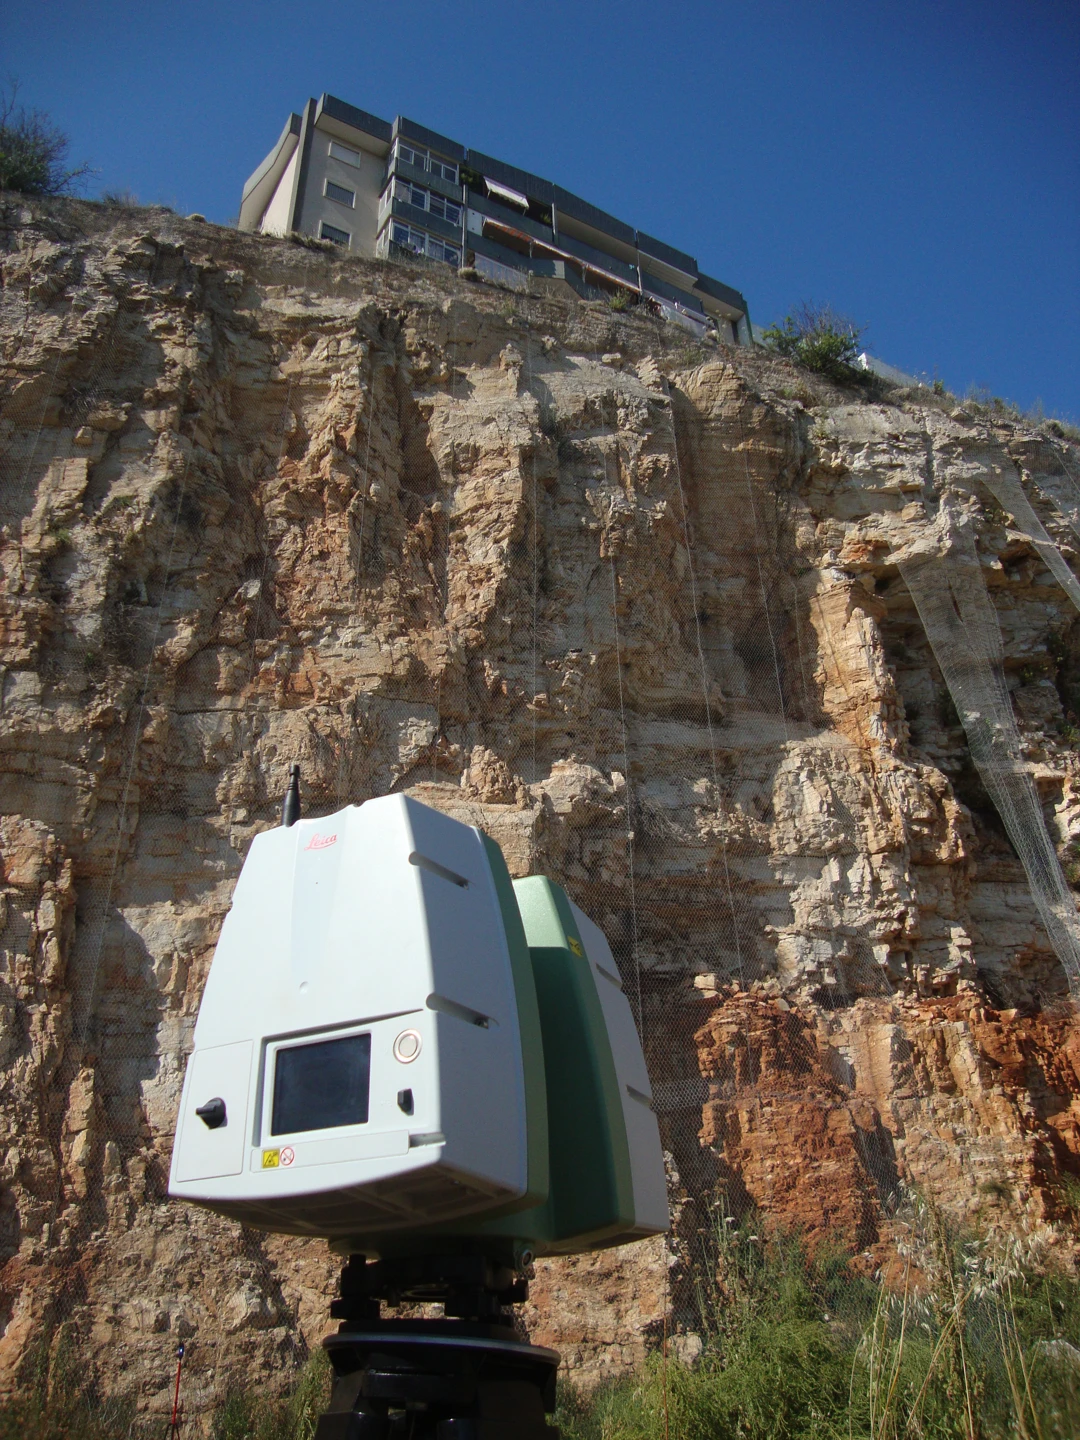 3d laser scanner survey view Ex Quarry Di Maso - Bari - Archimeter